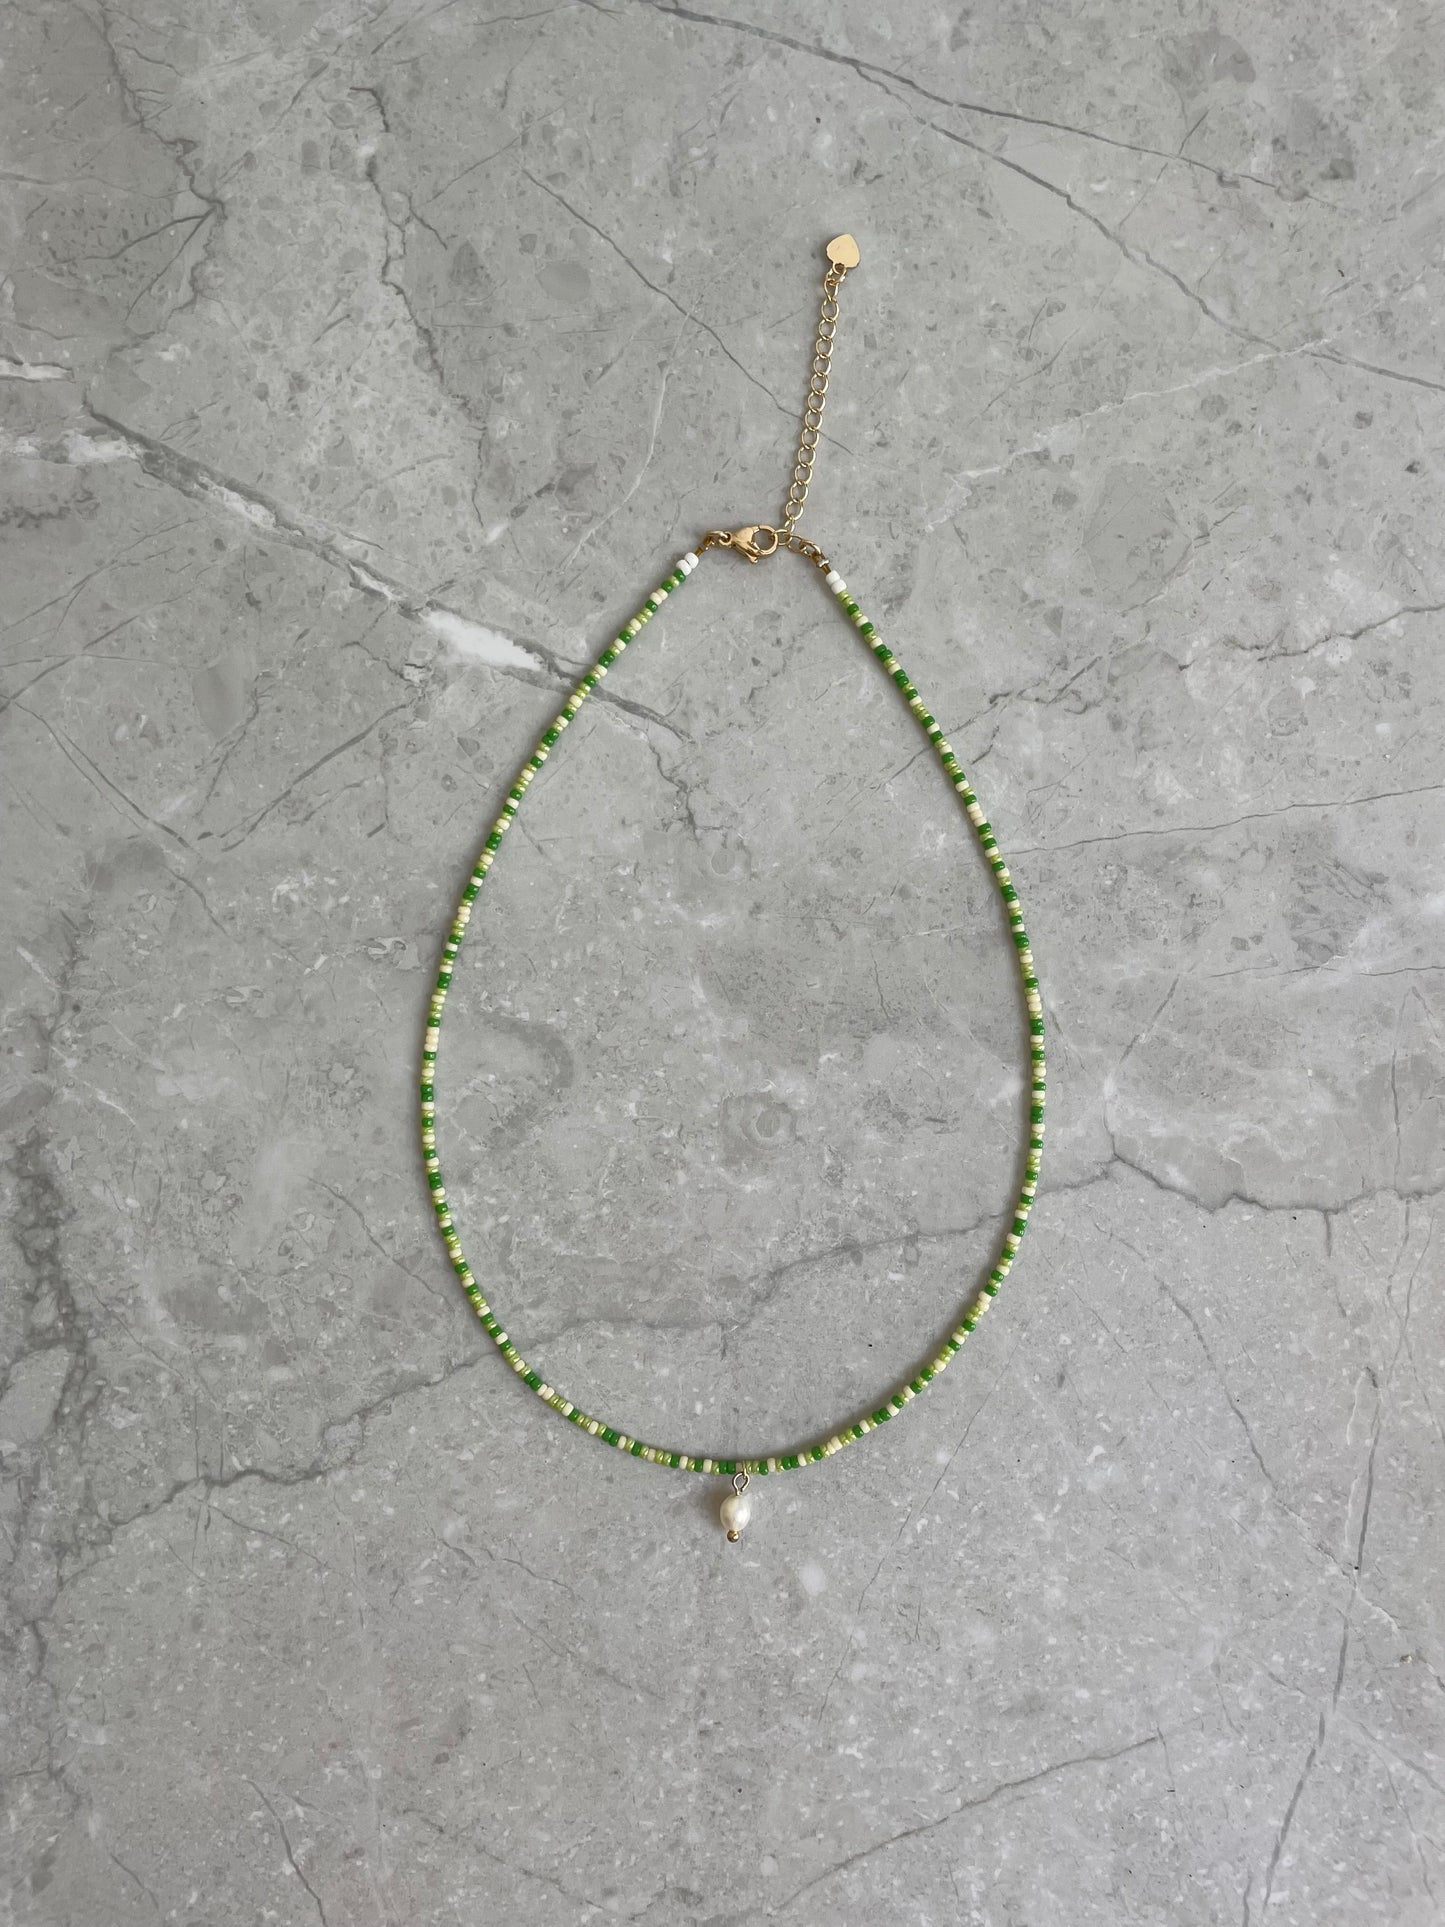 aloe necklace. handmade, Japanese beads, water resistant jewellery, freshwater pearls